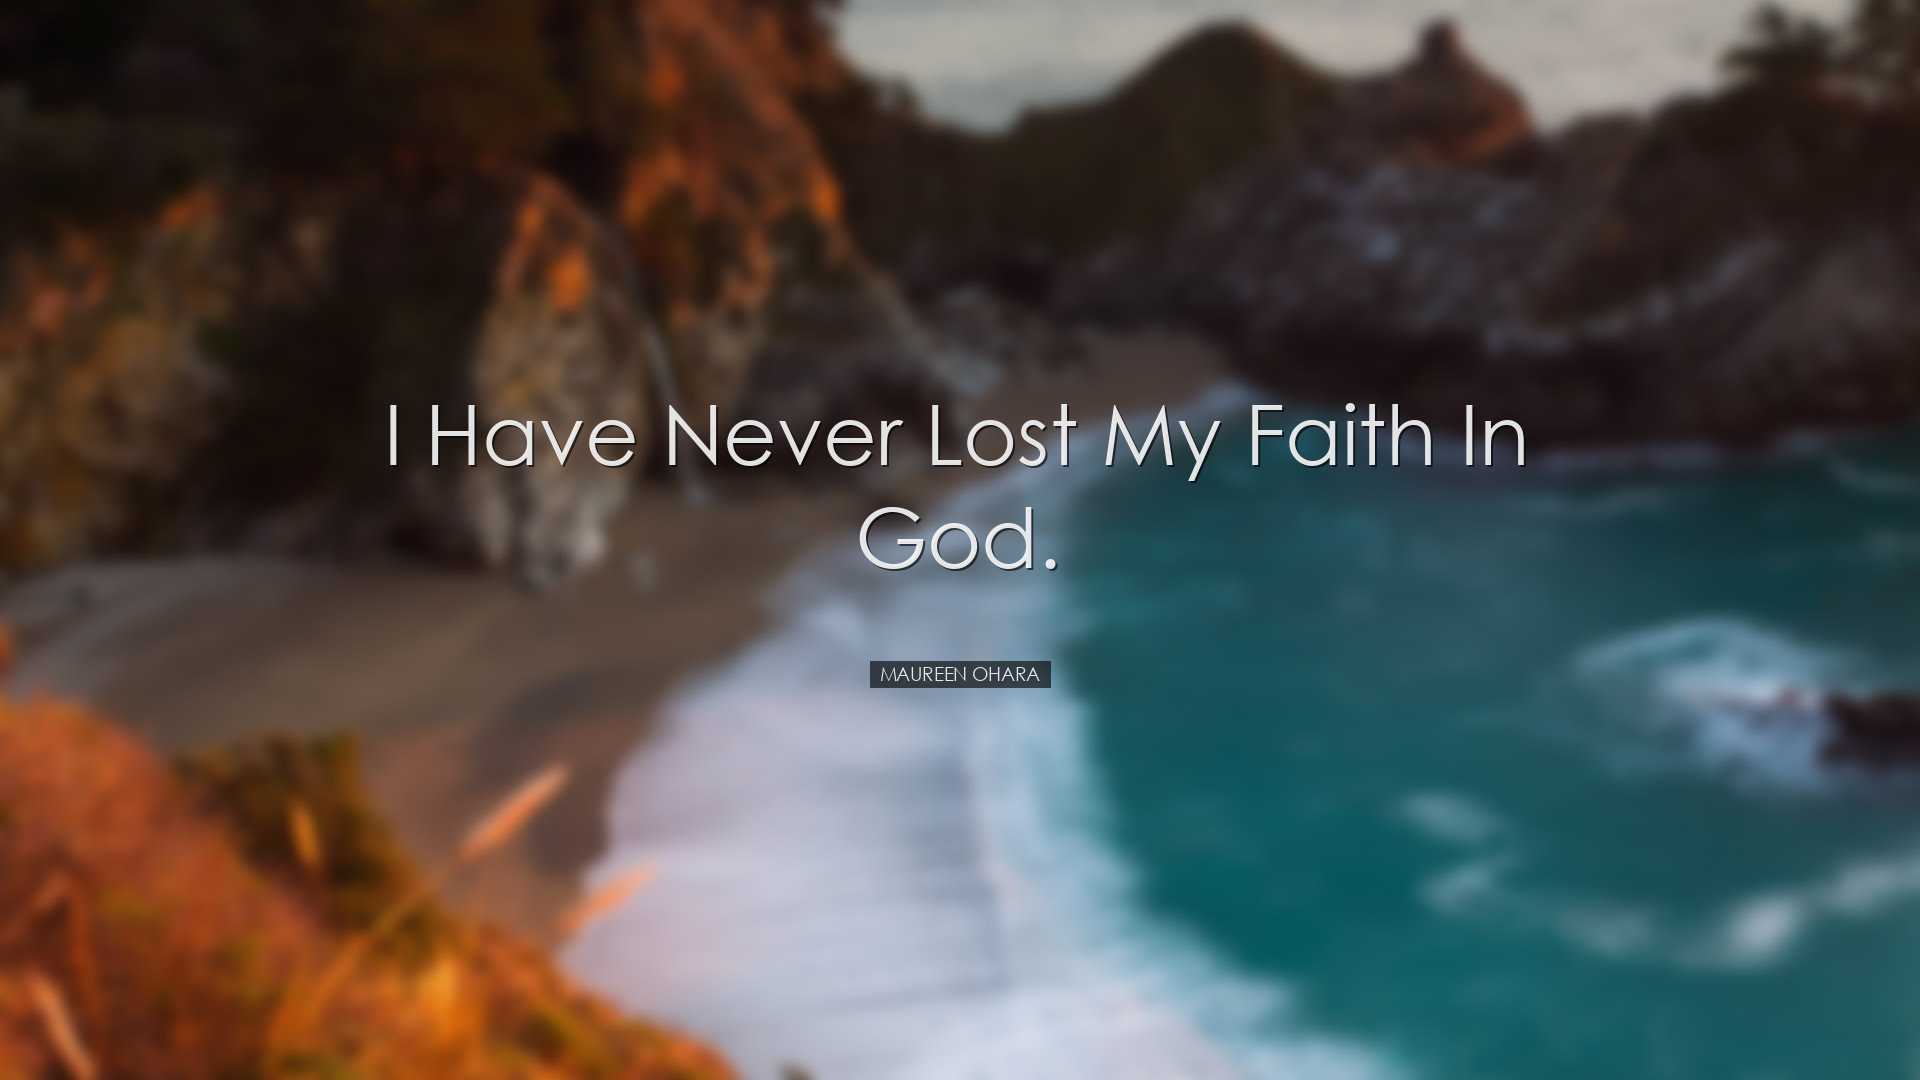 I have never lost my faith in God. - Maureen OHara